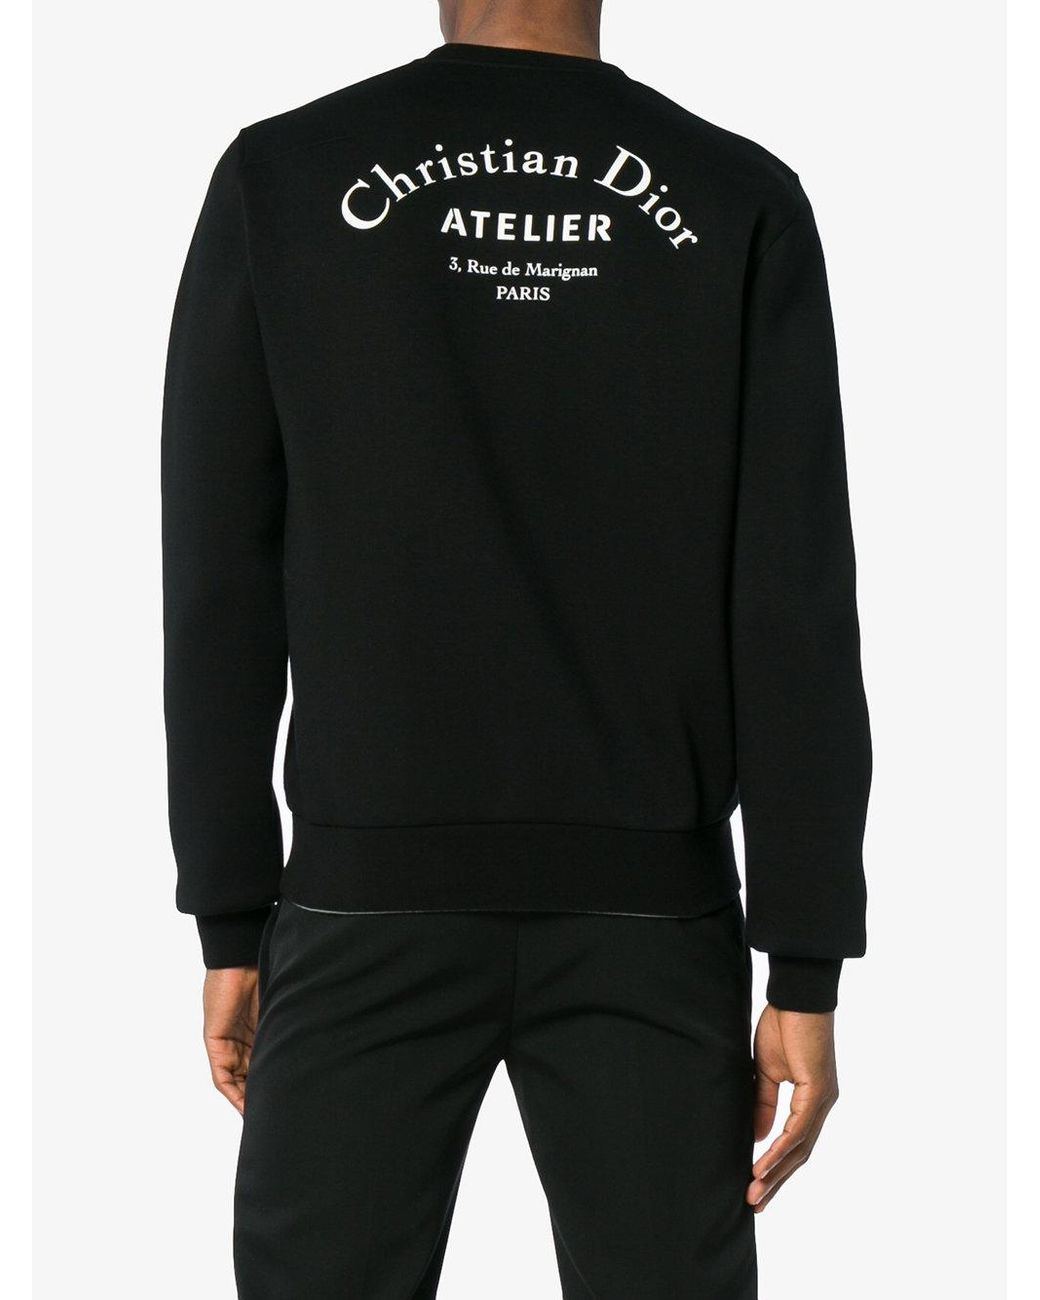 Dior Atelier Logo Print Crew Neck Sweatshirt in Black for Men | Lyst